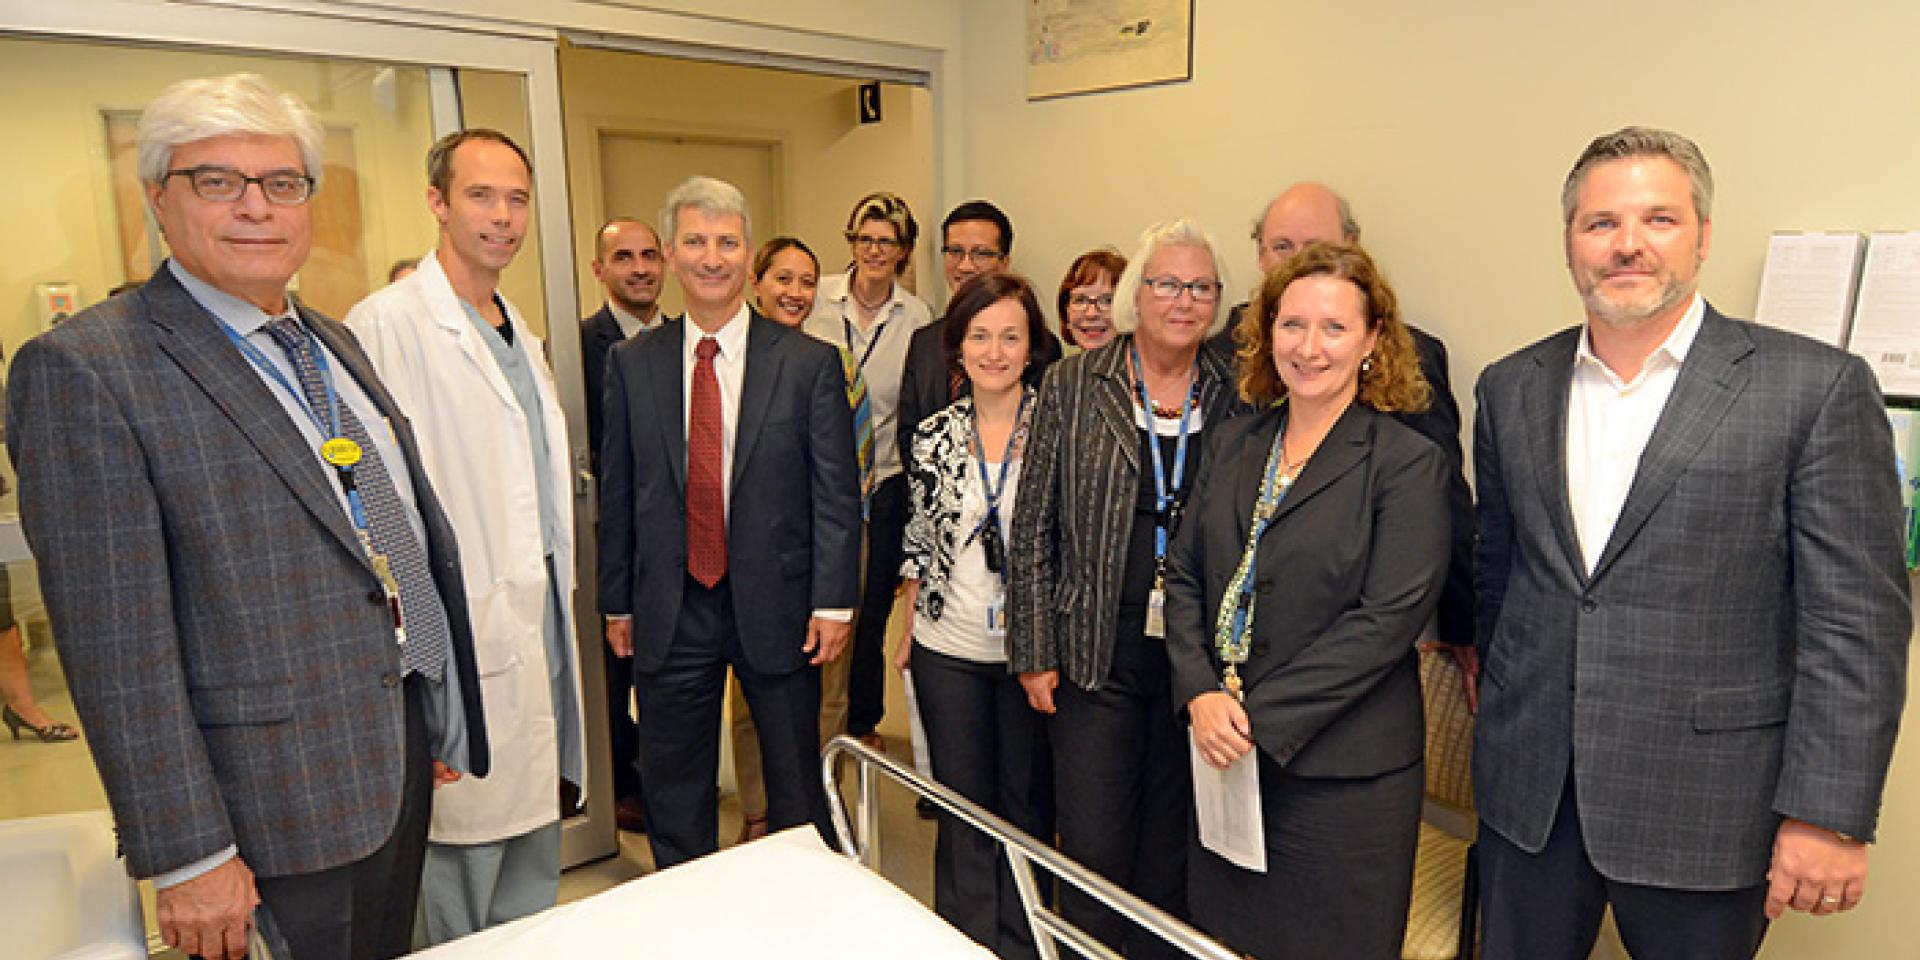 Michael Garron Hospital and SickKids staff and physicians